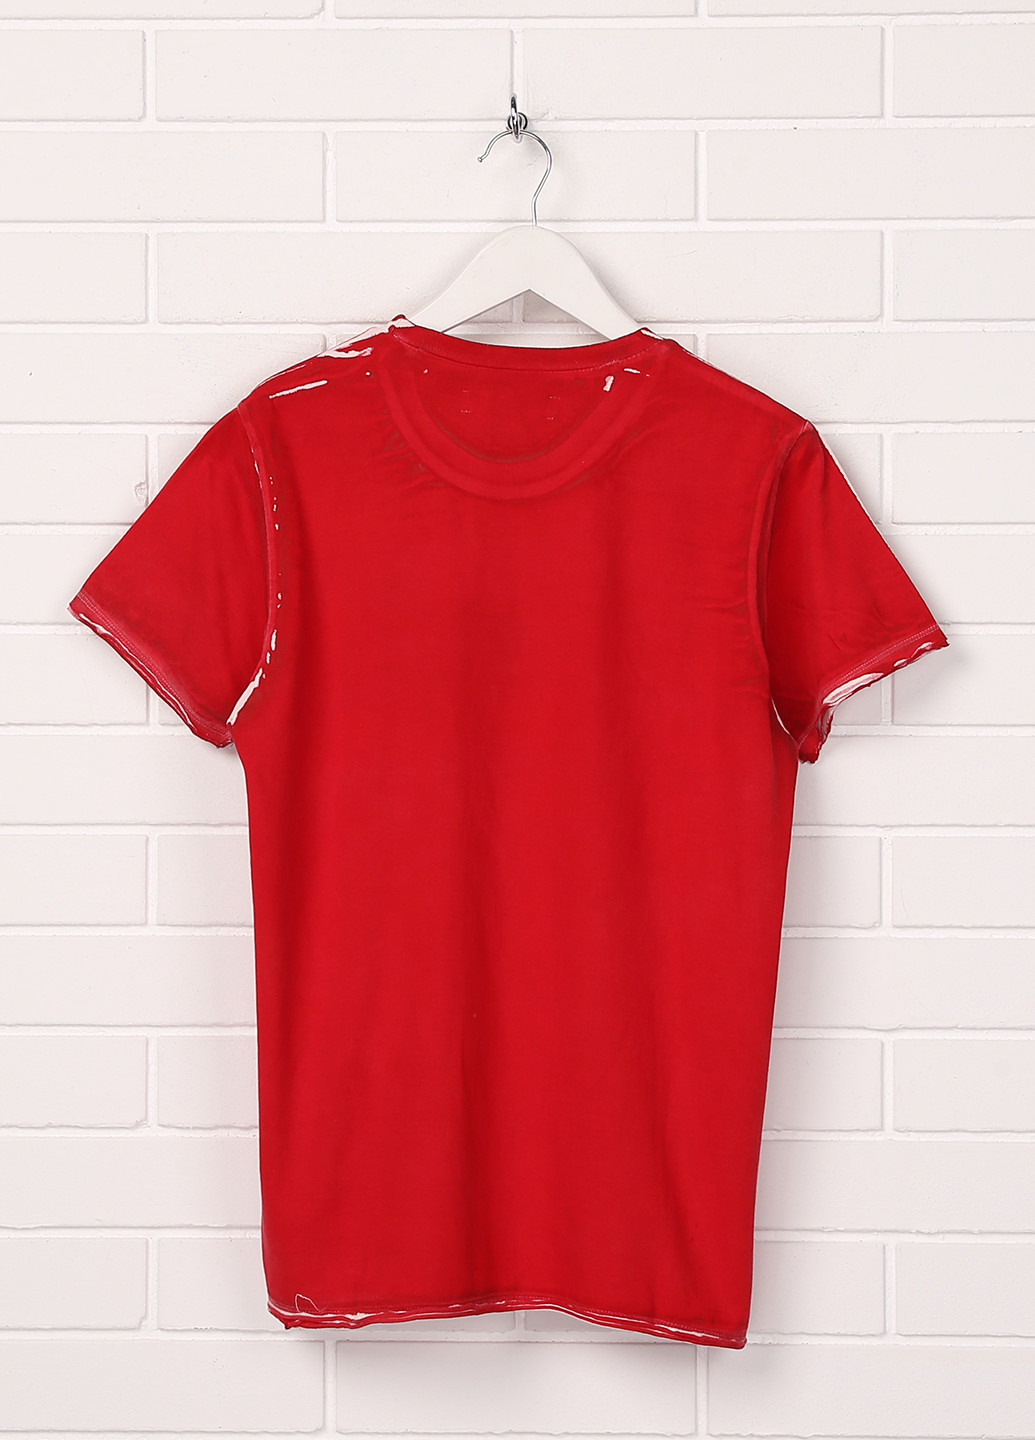 Красная летняя футболка с коротким рукавом John Galliano